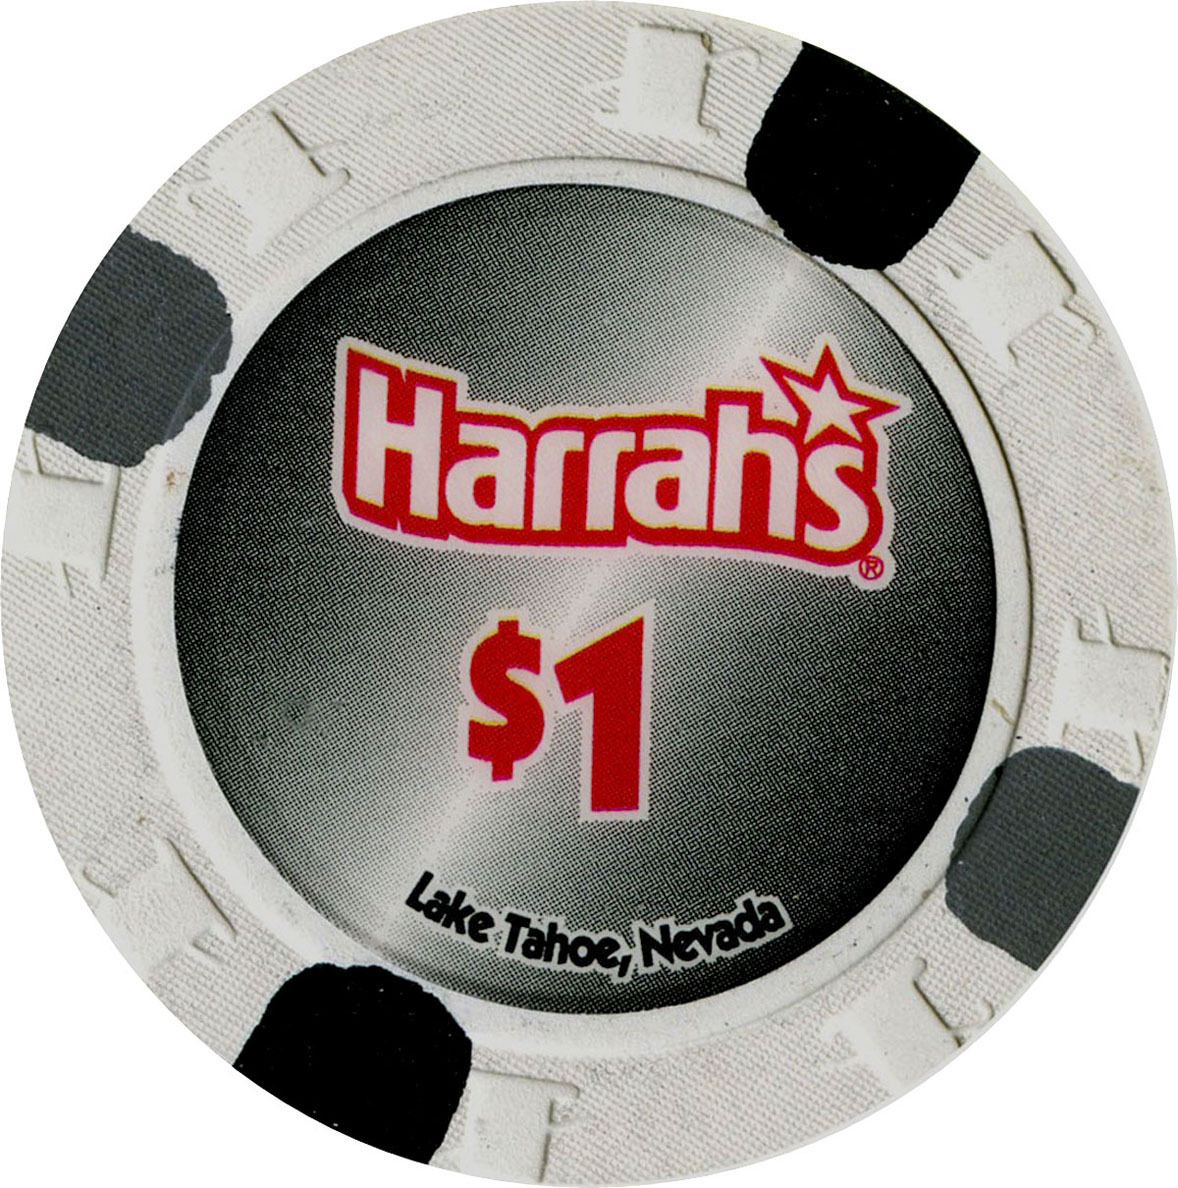 who owns harrahs lake tahoe casino